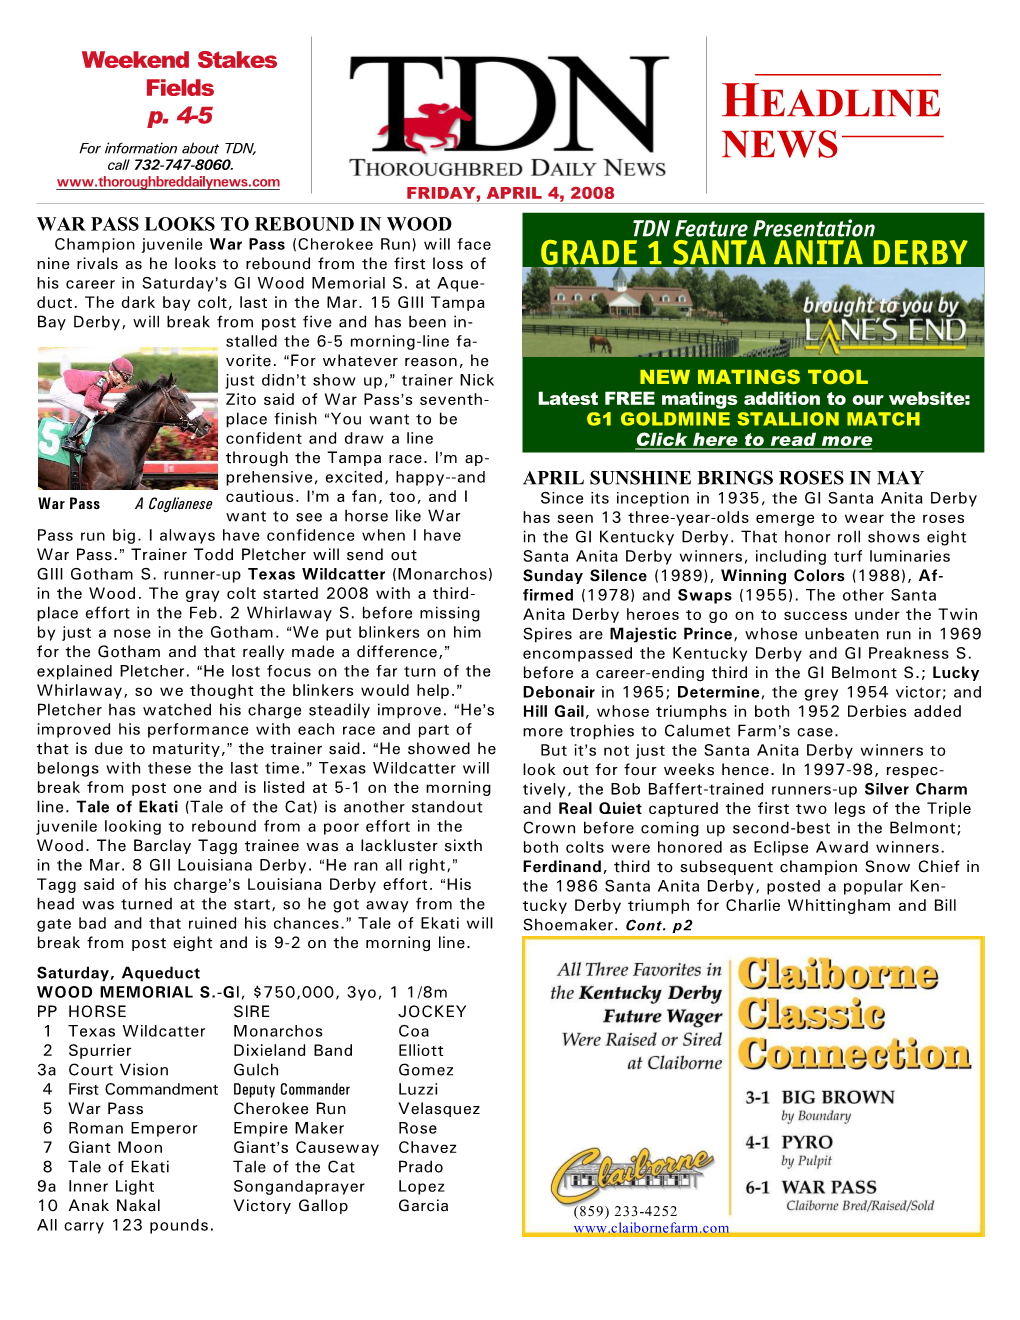 HEADLINE NEWS • 4/4/08 • PAGE 2 of 6